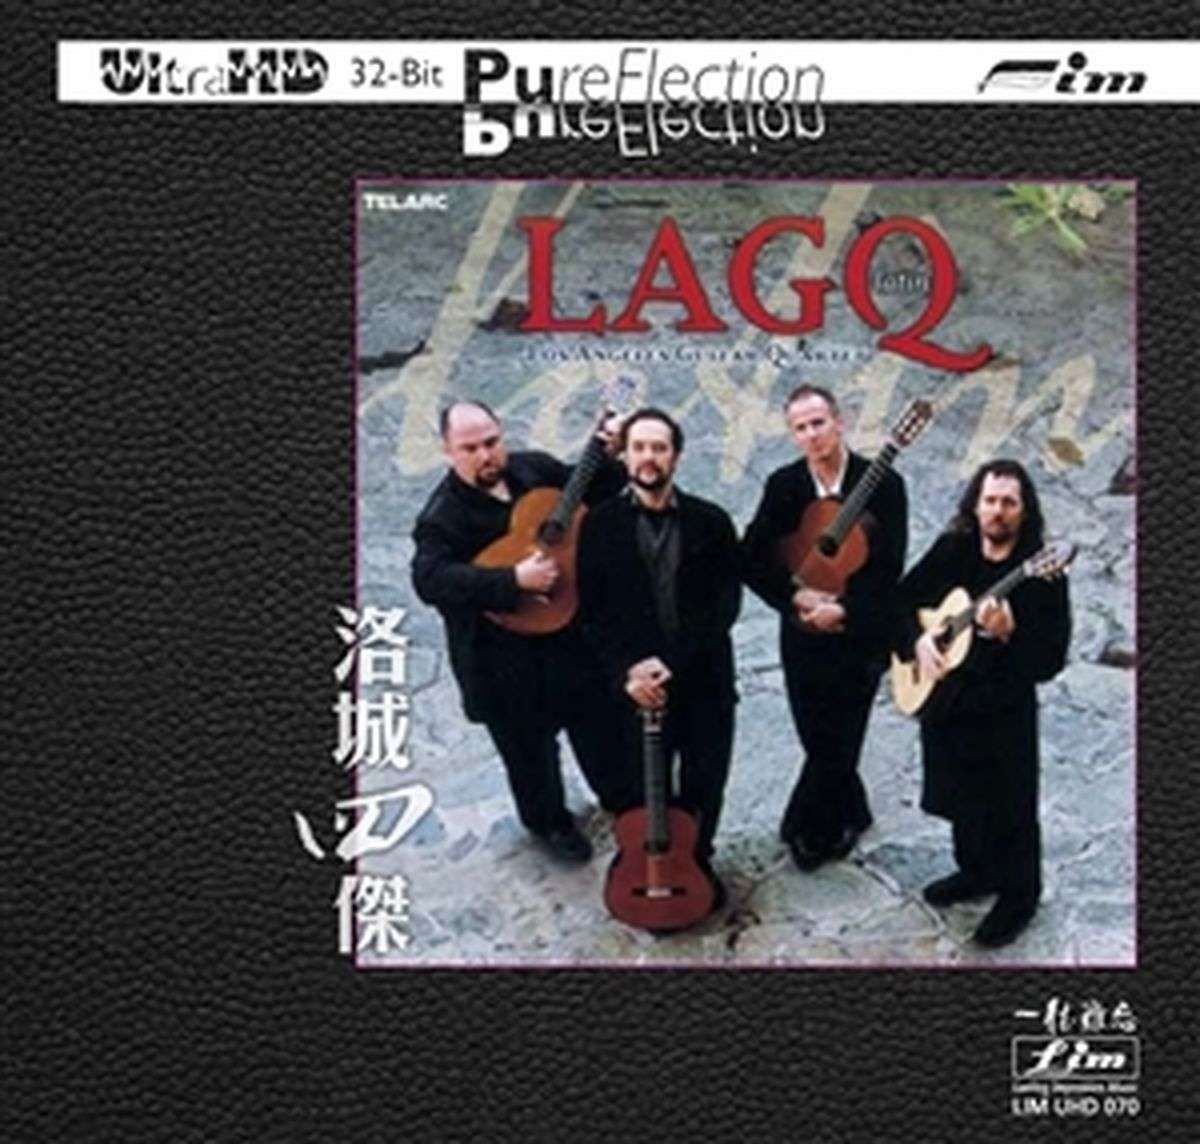 Los Angeles Guitar Quartet. Los Angeles Guitar Quartet - b & b обложка. Los Angeles Guitar Quartet - o Morro não tem vez обложка.